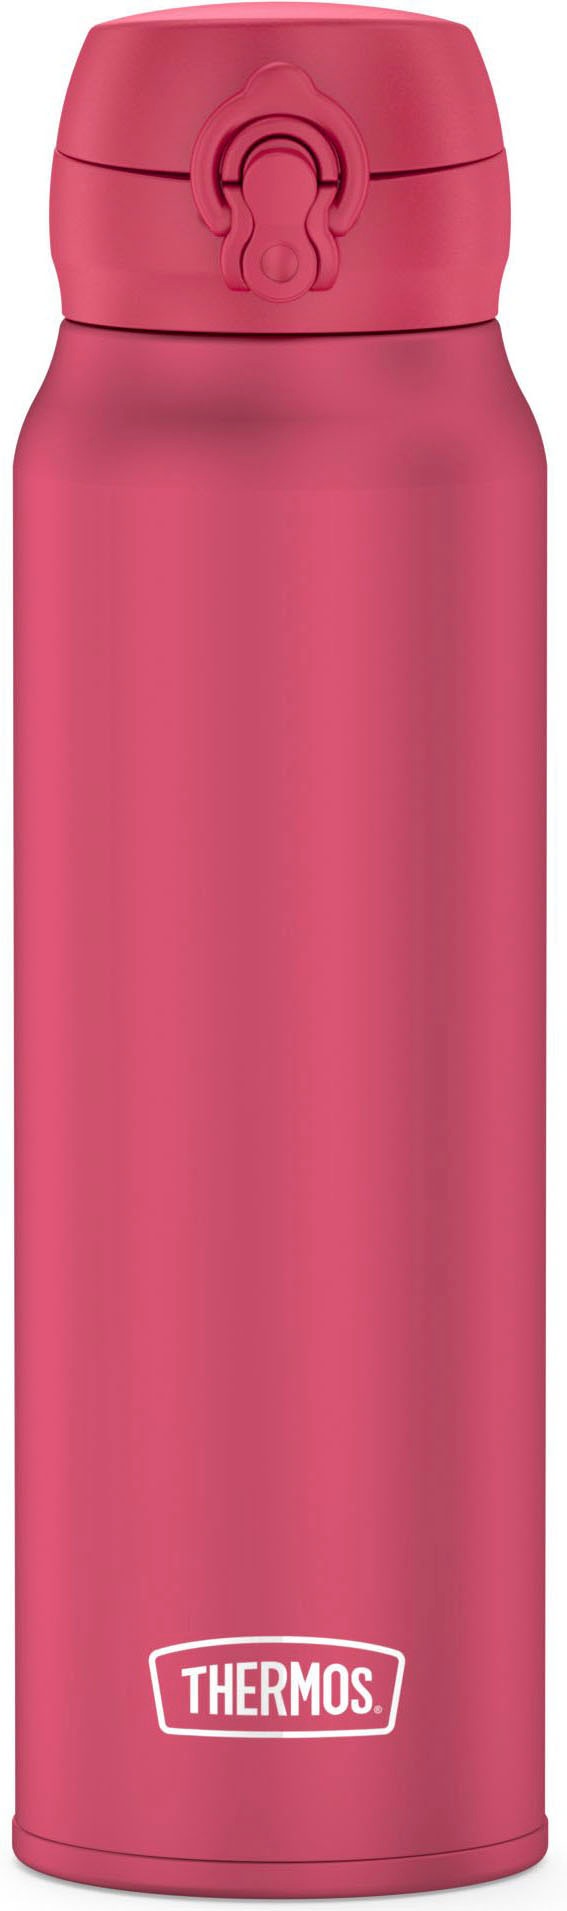 THERMOS Isolierflasche »ULTRALIGHT BOTTLE«, doppelwandiger Edelstahl